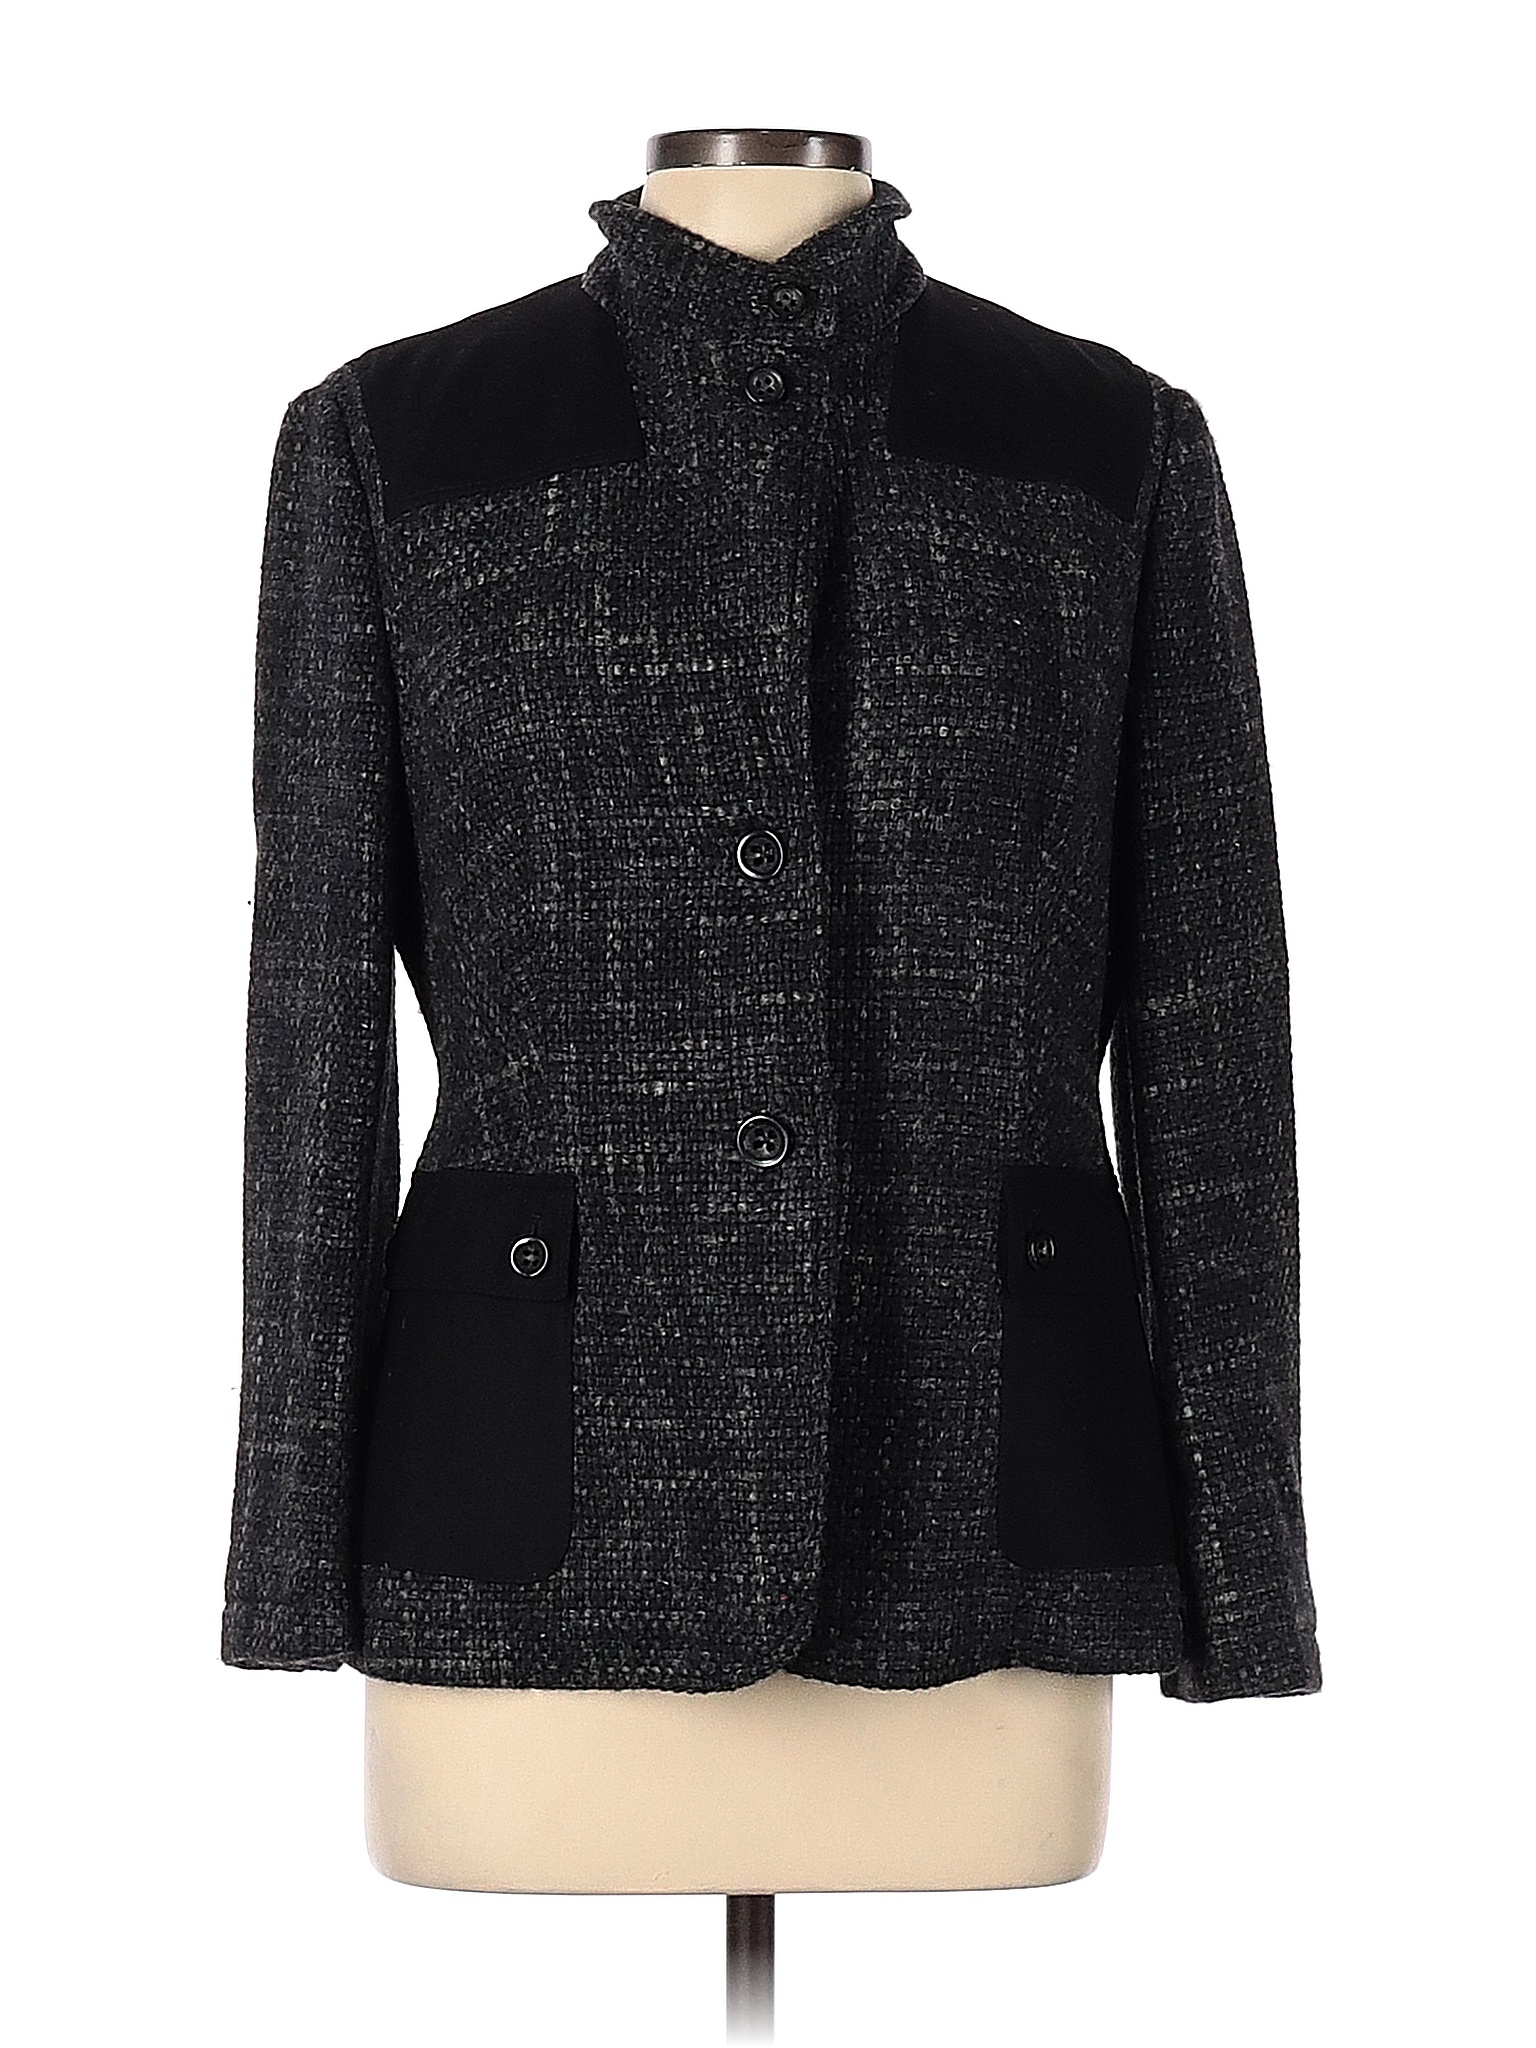 Piazza Sempione Solid Black Gray Jacket Size 48 (IT) - 91% off | thredUP